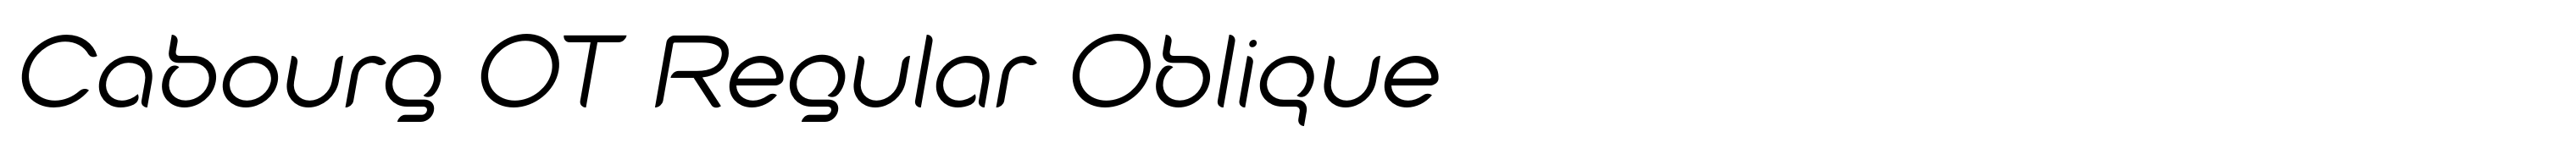 Cabourg OT Regular Oblique